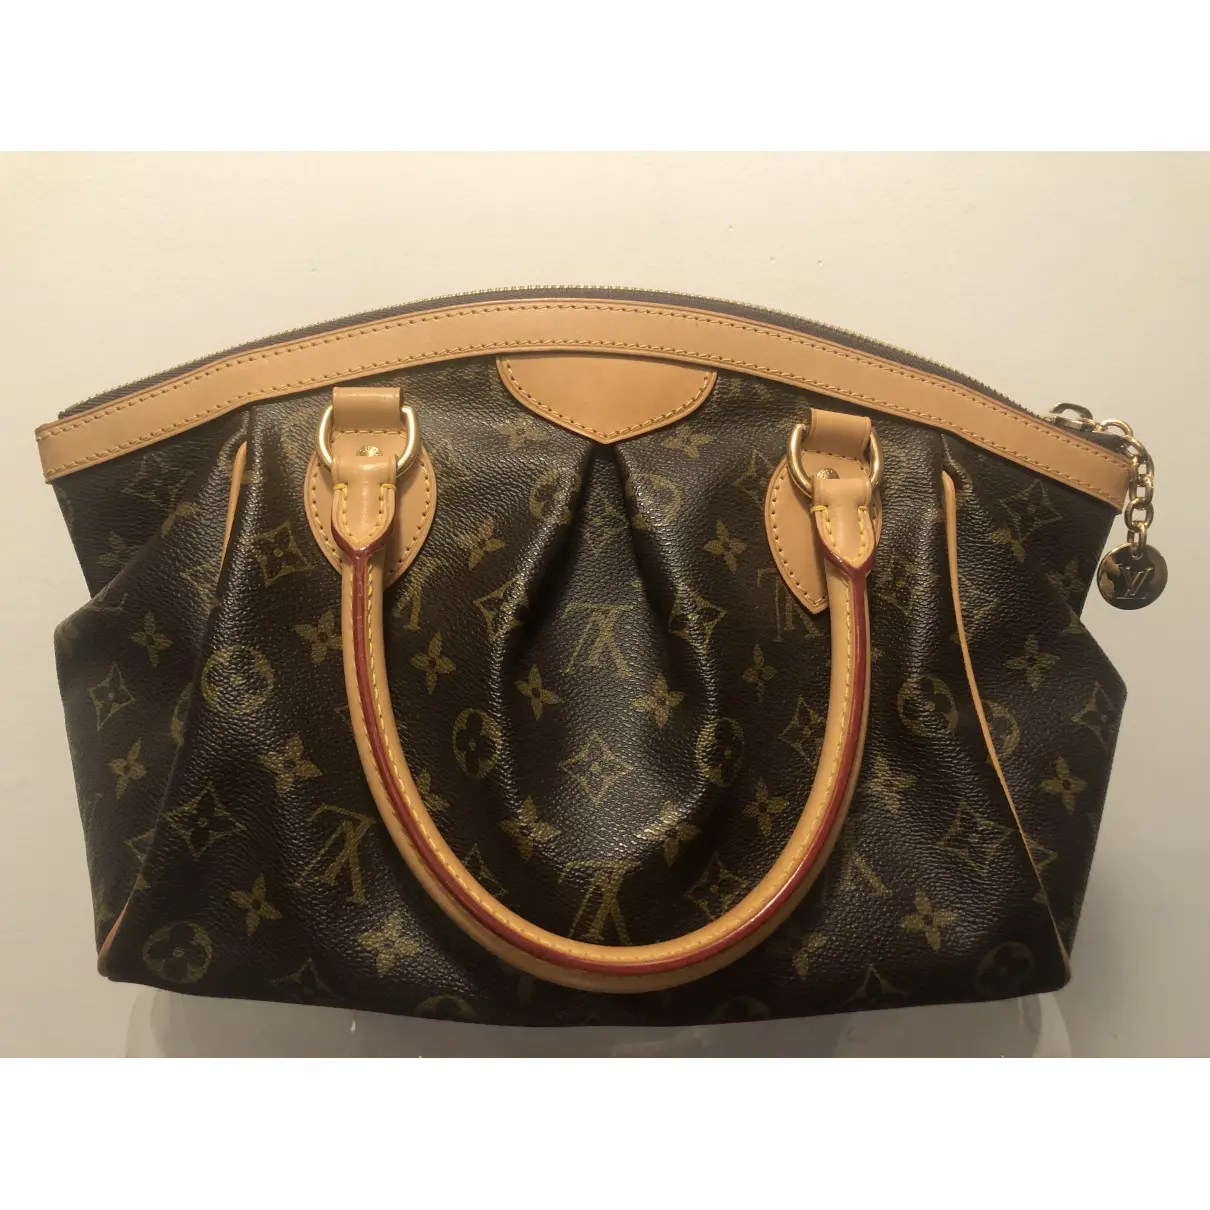 Buy Louis Vuitton Tivoli leather handbag online